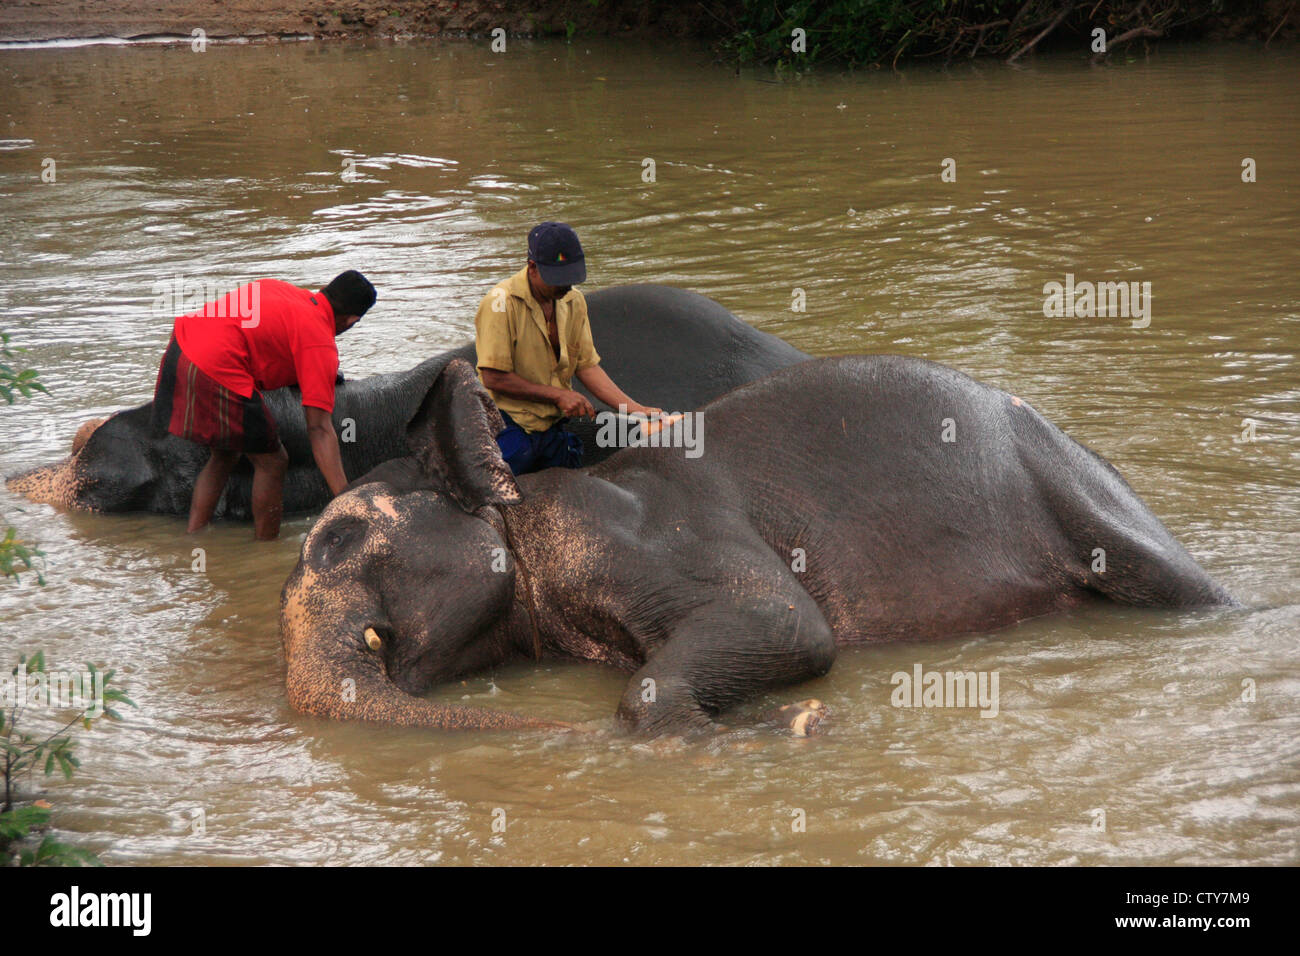 Men bathing an elephants, Sri Lanka Stock Photo